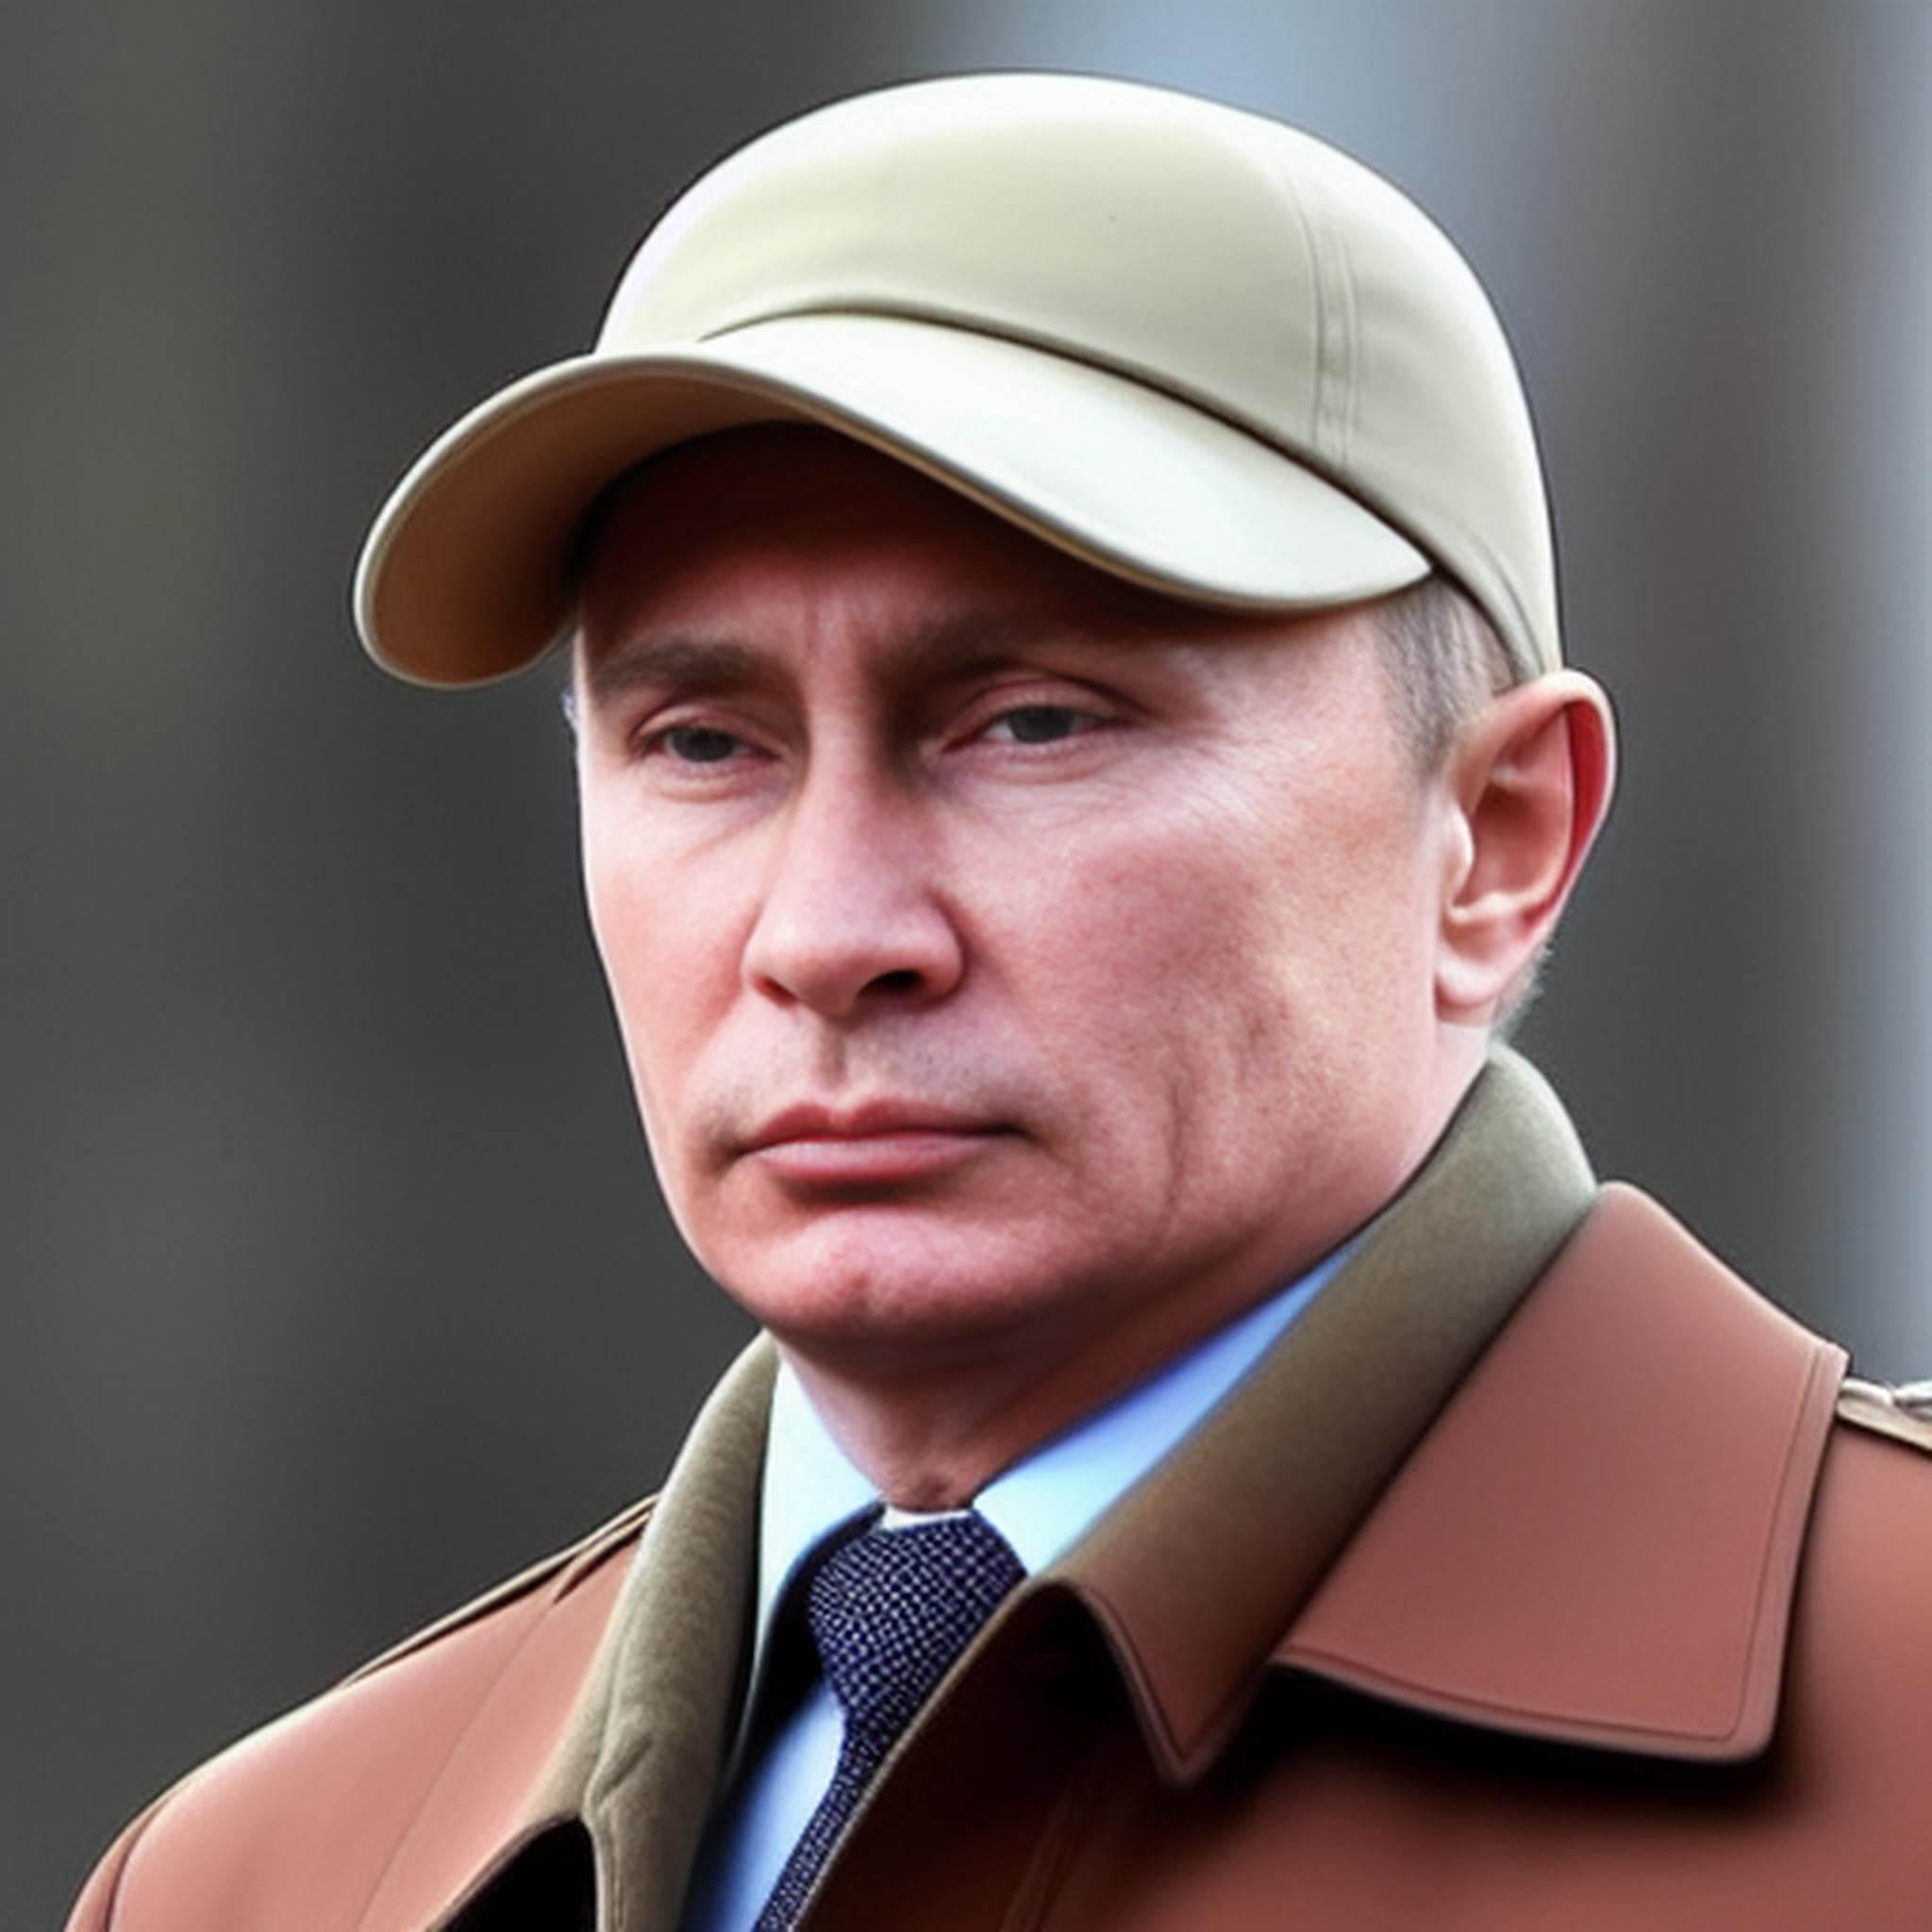 Russian President Vladimir Putin wearing a tan hat and coat.